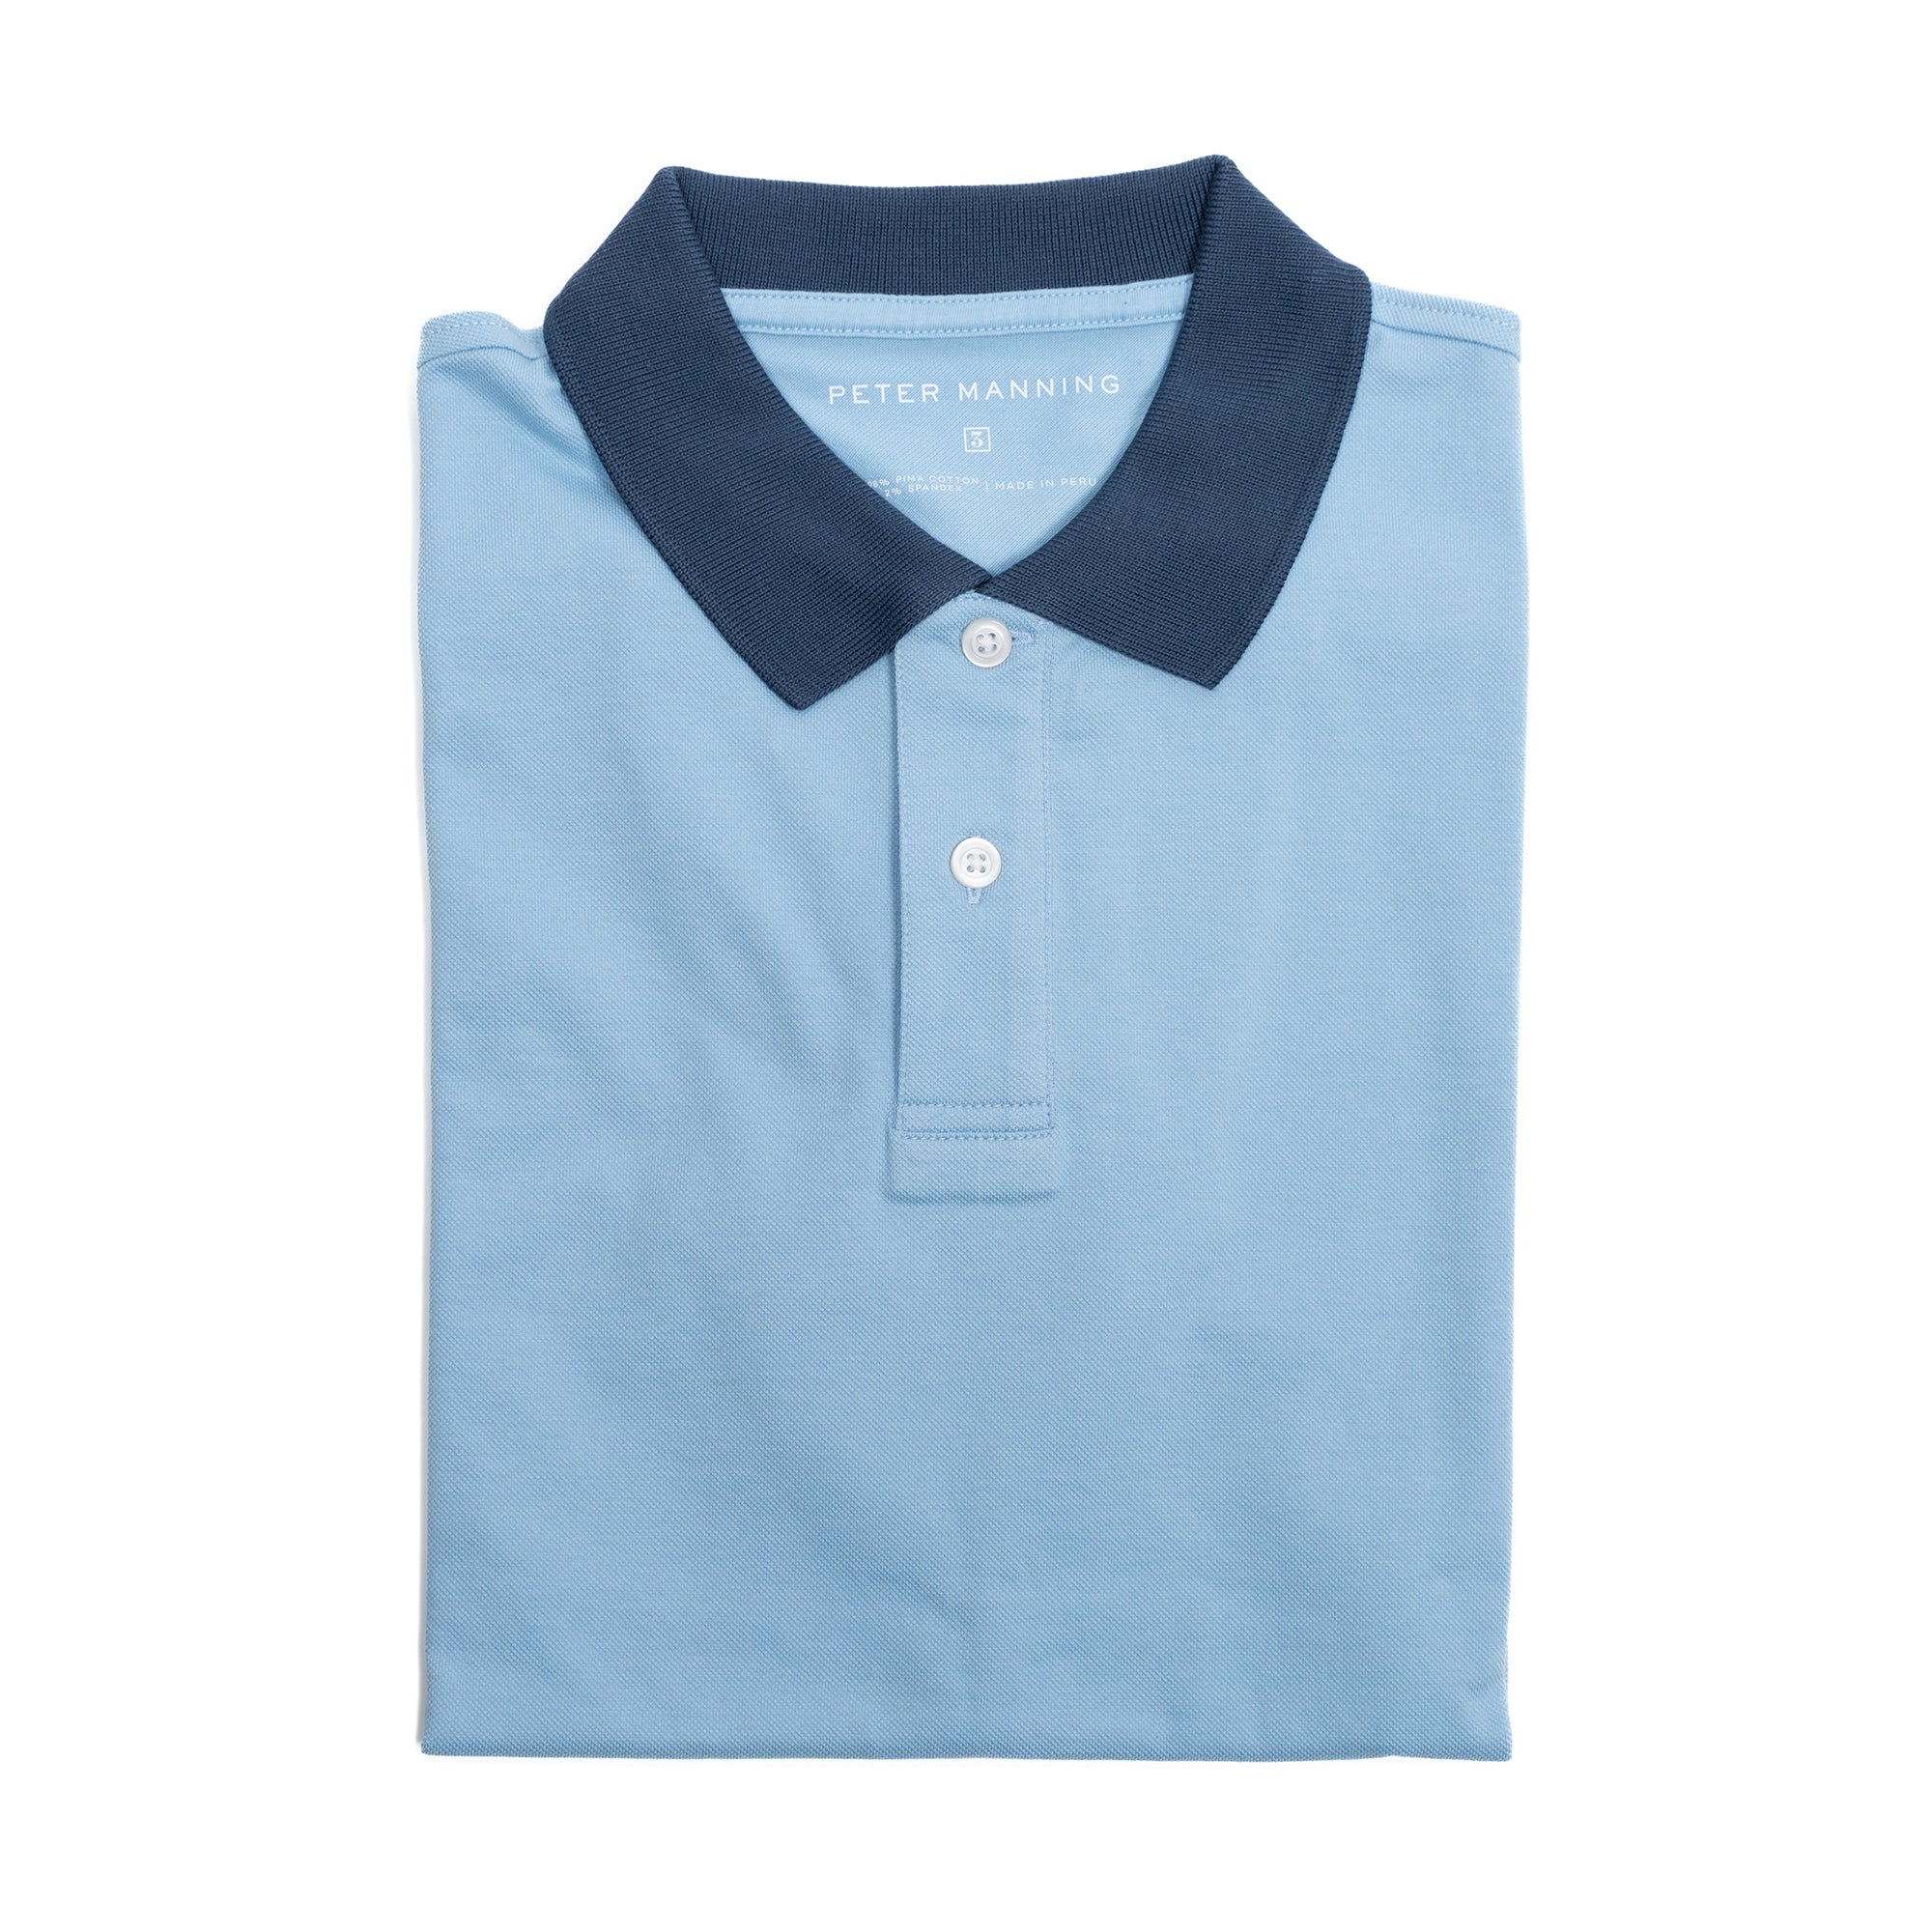 James Polo Shirt - Pale Blue Tipped